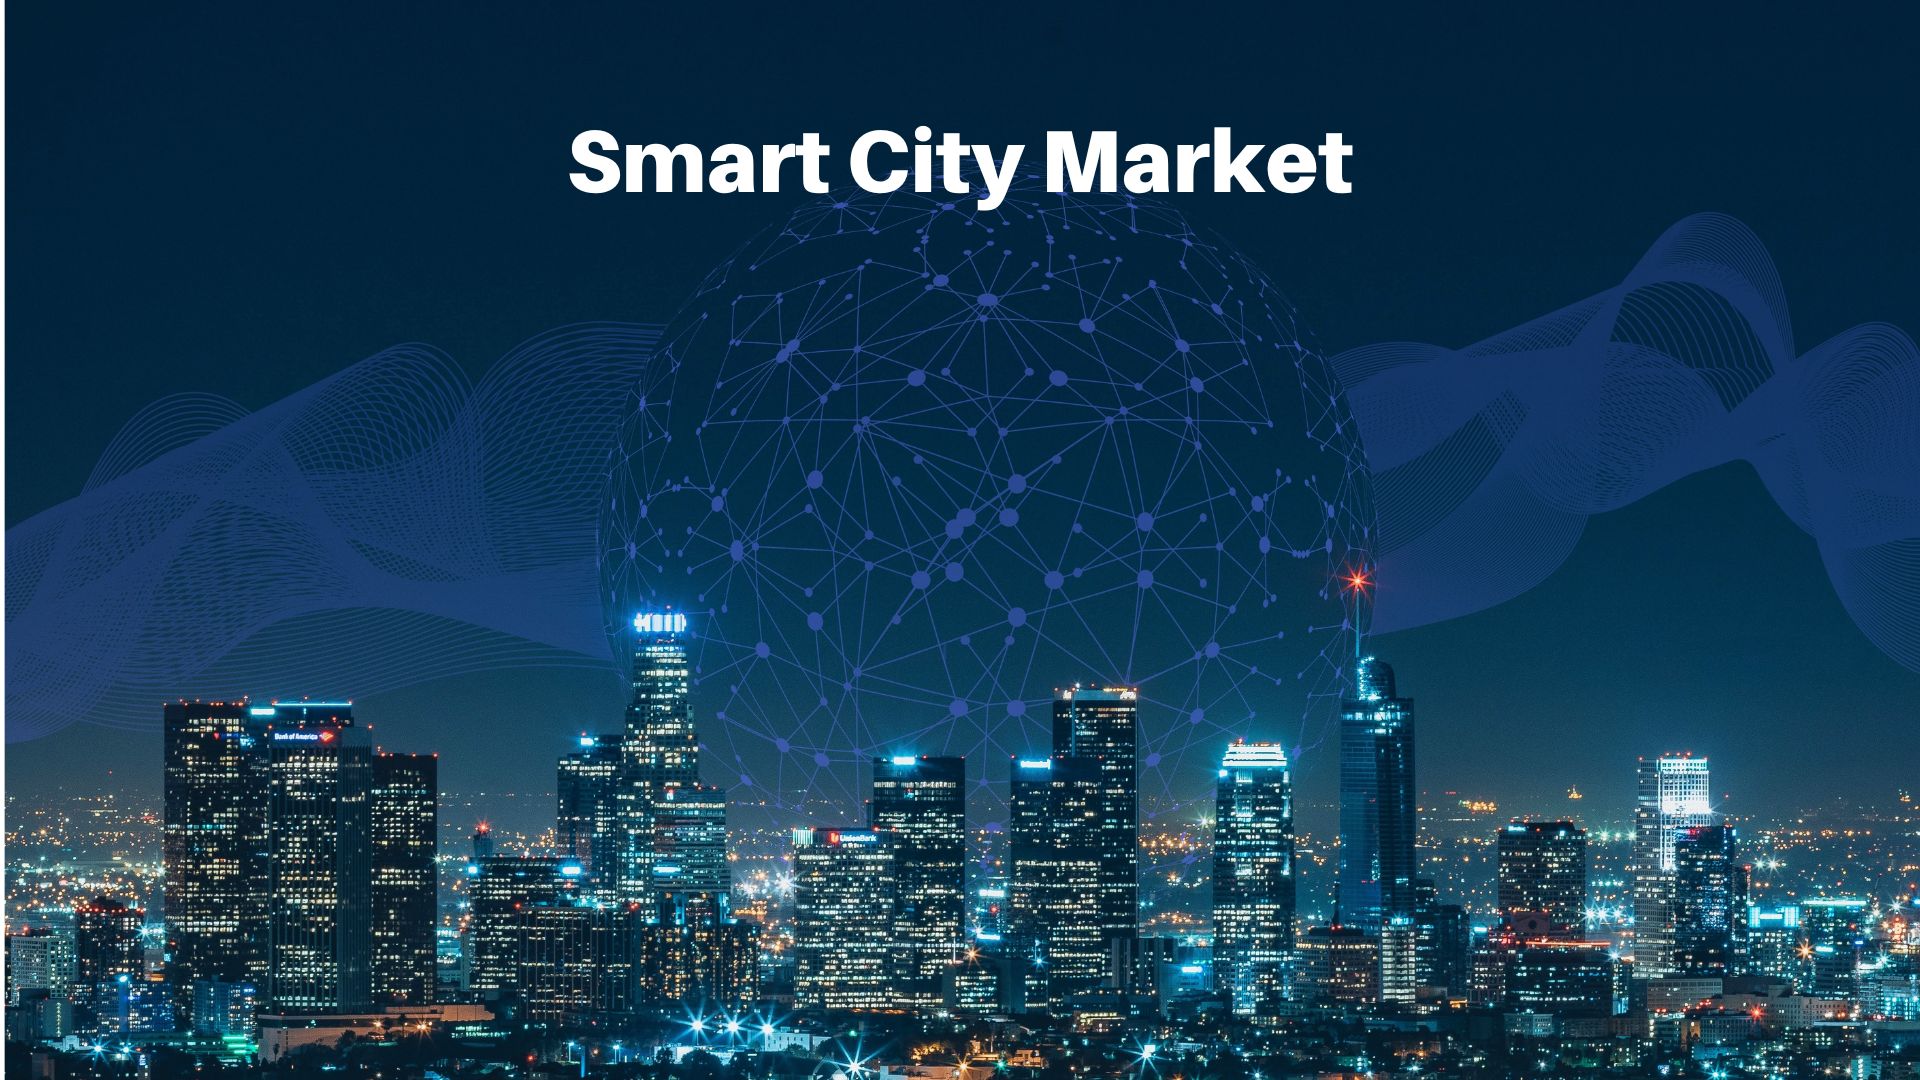 Smart City Market Revenue to Cross USD 7,146.8 Billion, Globally, by 2032